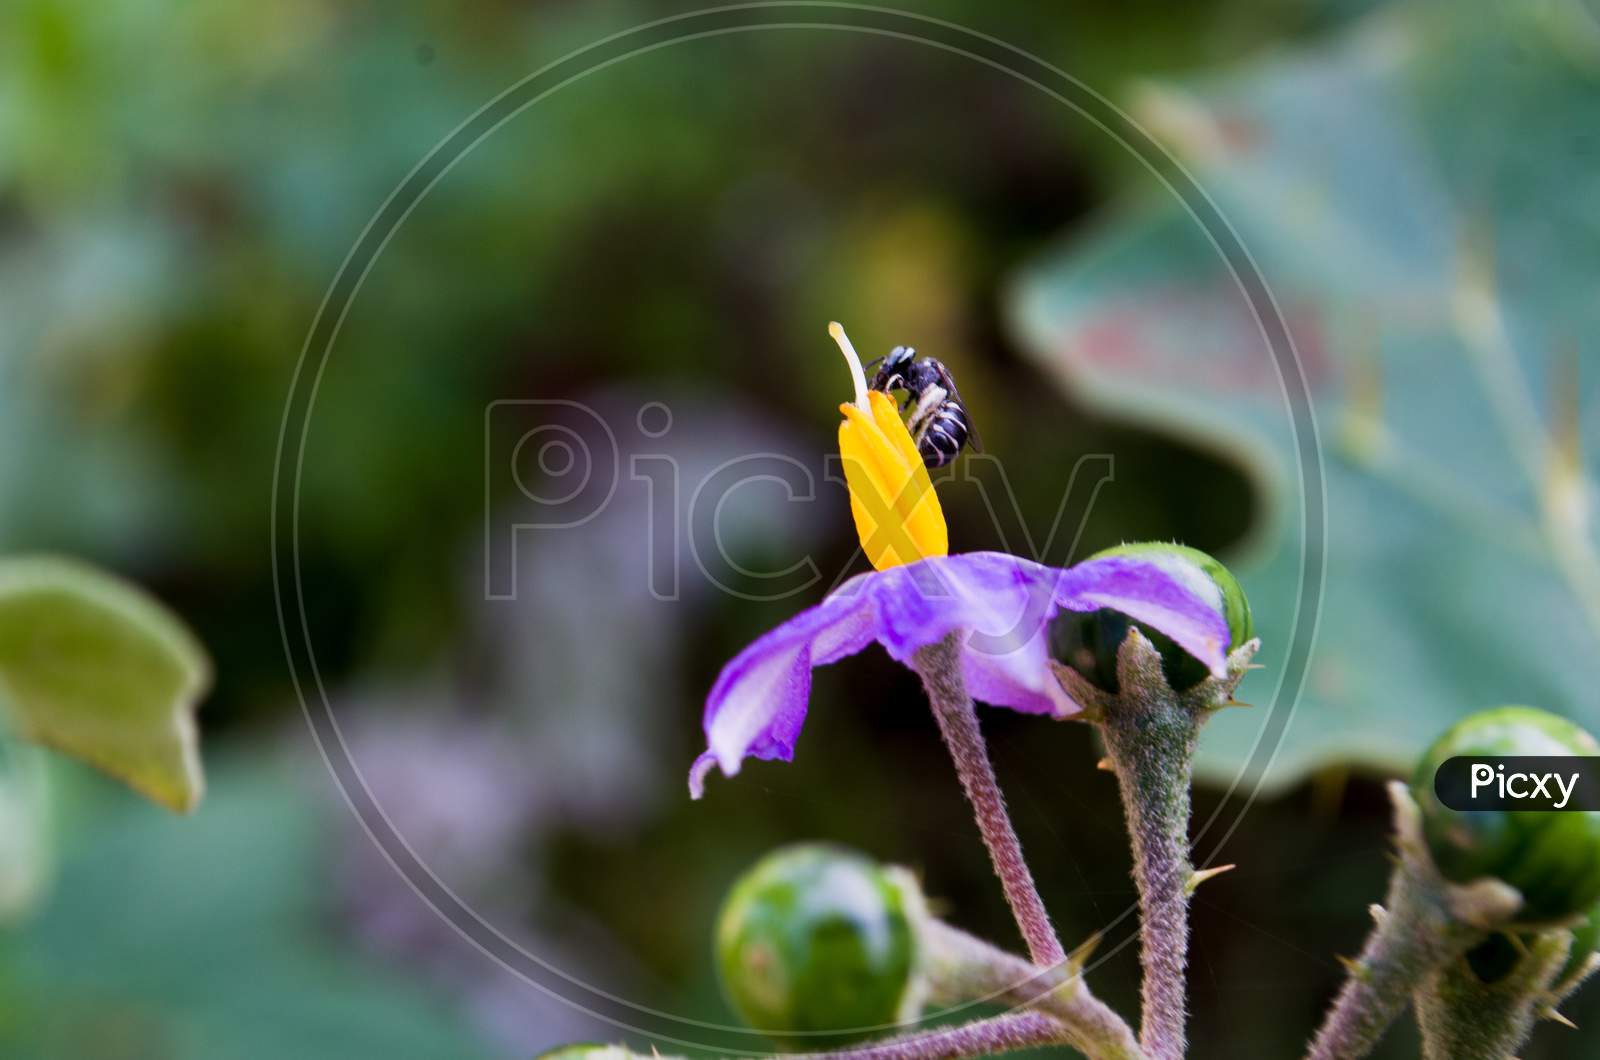 Purple bellflower